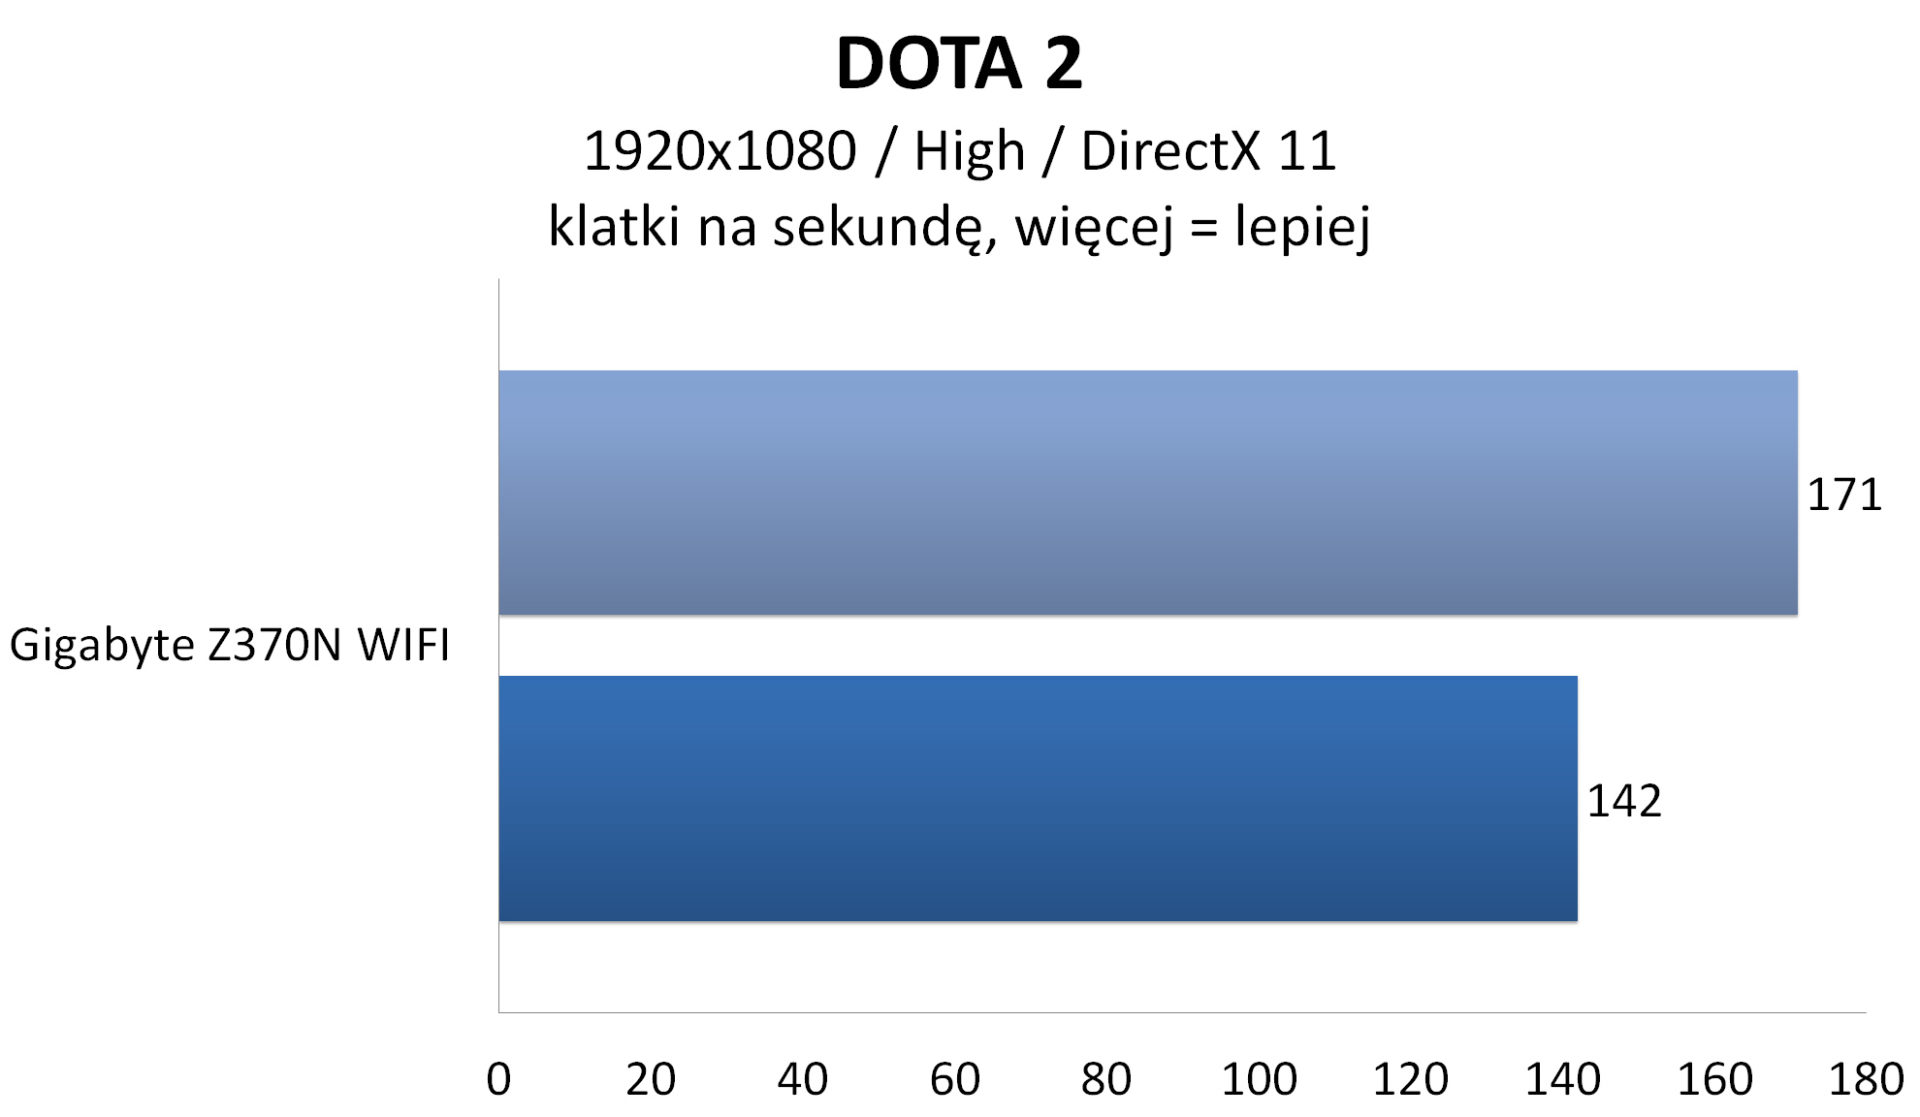 GIGABYTE Z370N WIFI - wykresy